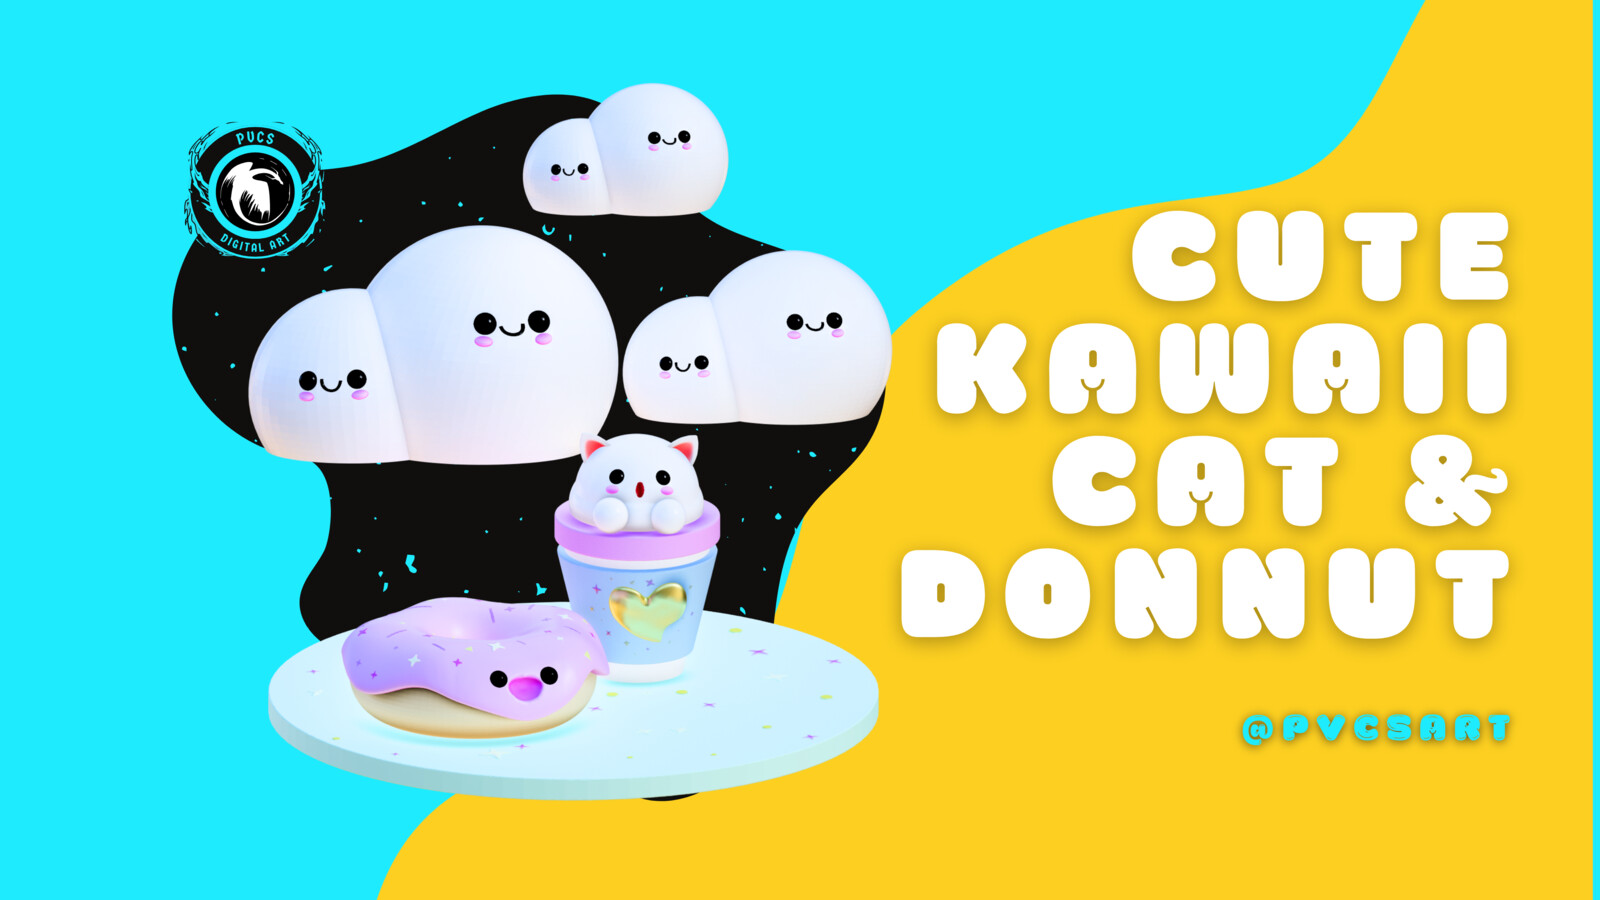 Sweet Dreams: Kawaii Cat, Cute Donuts, and Dreamy Clouds